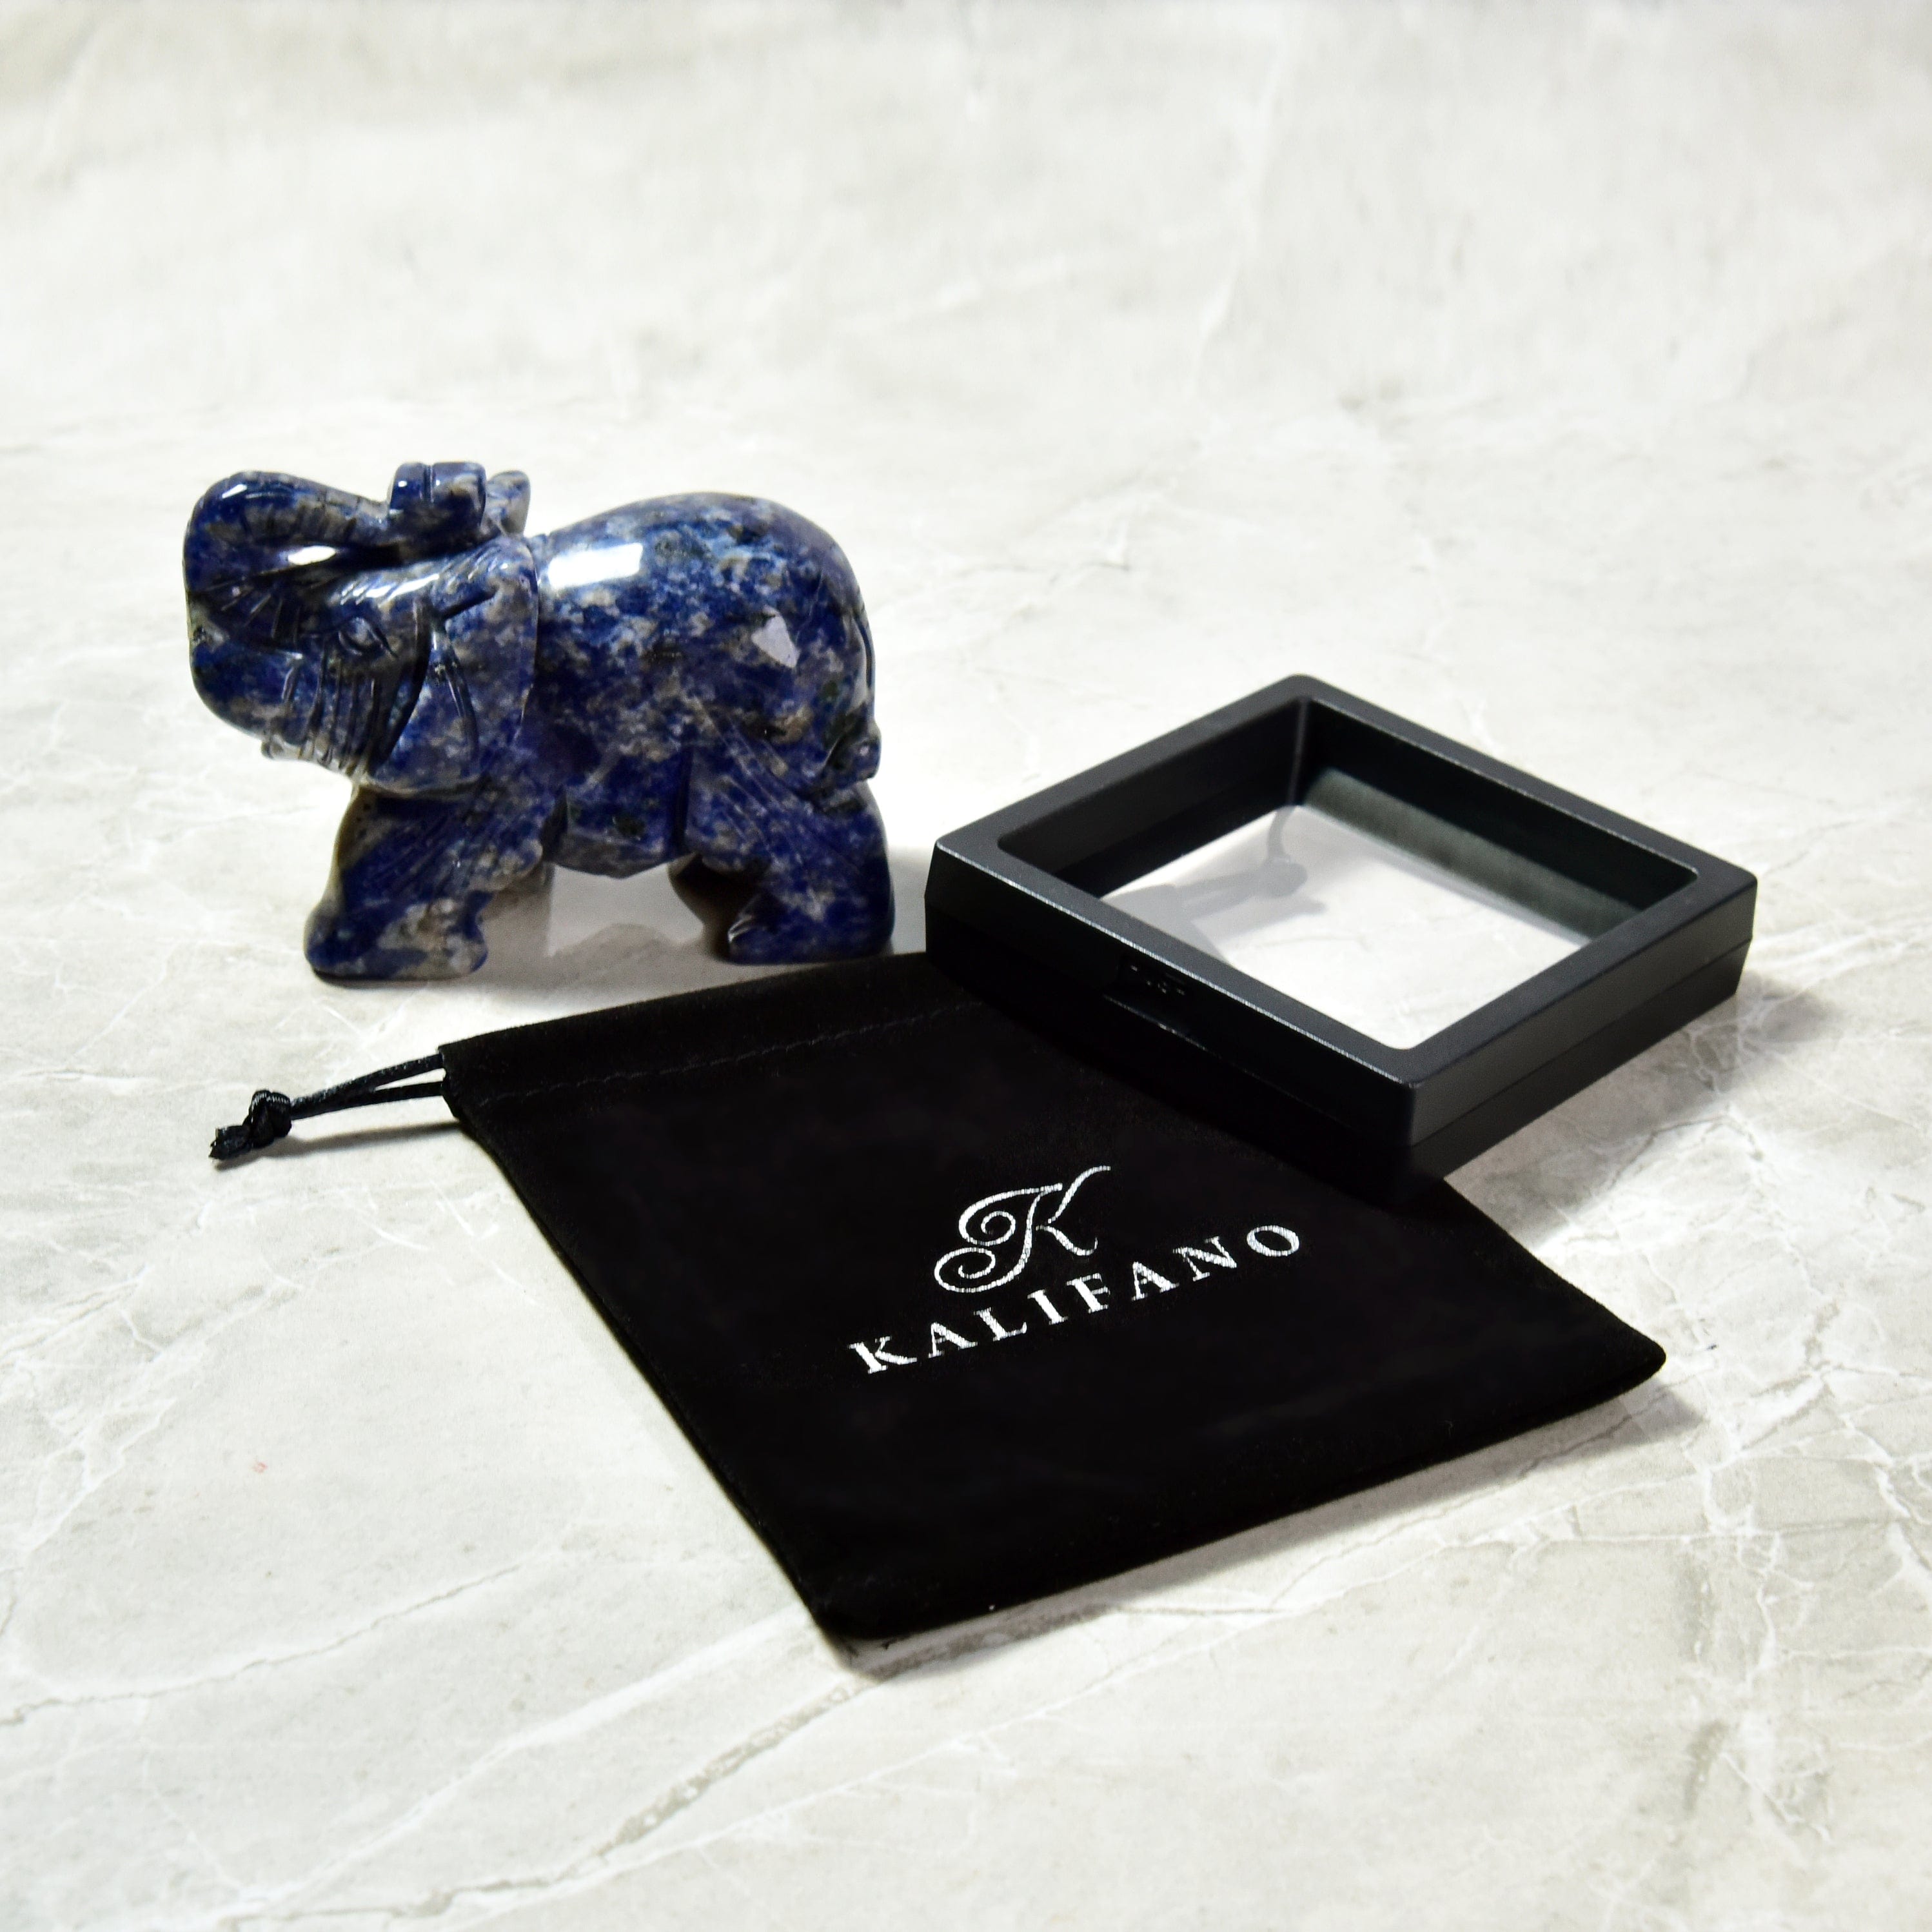 KALIFANO Gemstone Carvings 4" Sodalite Elephant Natural Gemstone Carving CV140-E-SD